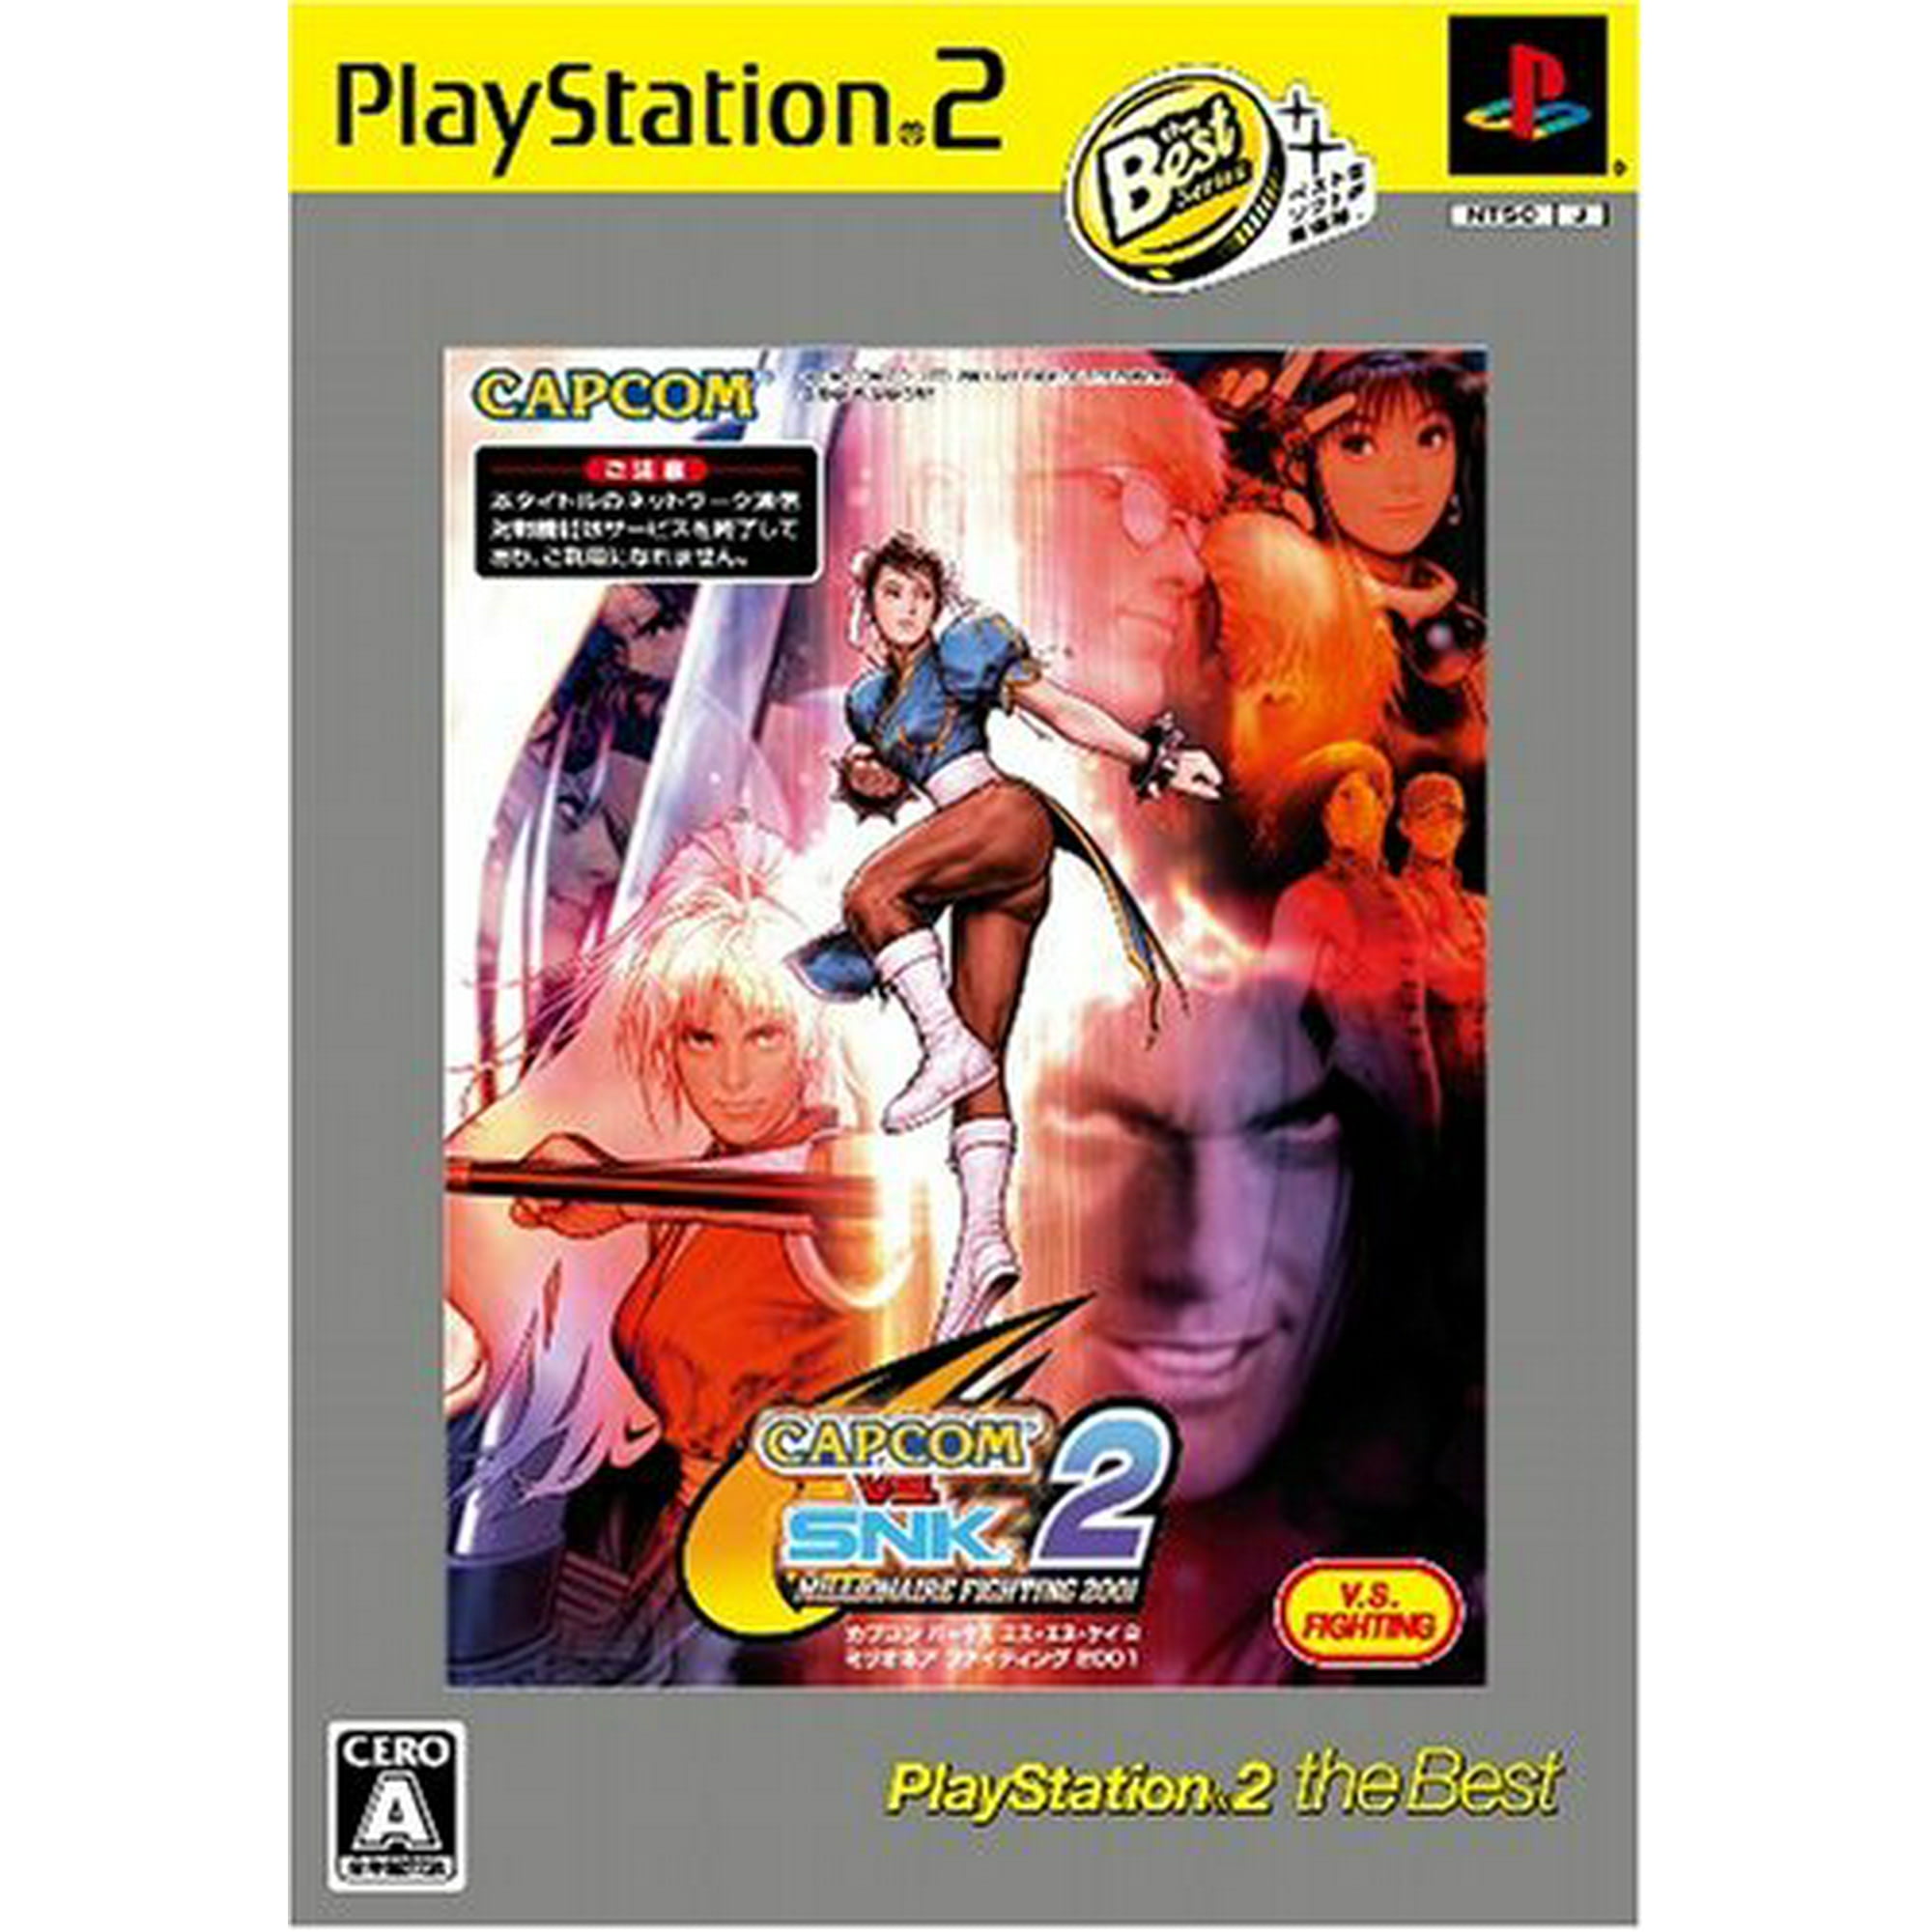 Capcom Vs Snk 2 Millionaire Fighting 01 Playstation2 The Best Reprint Japan Import Walmart Canada